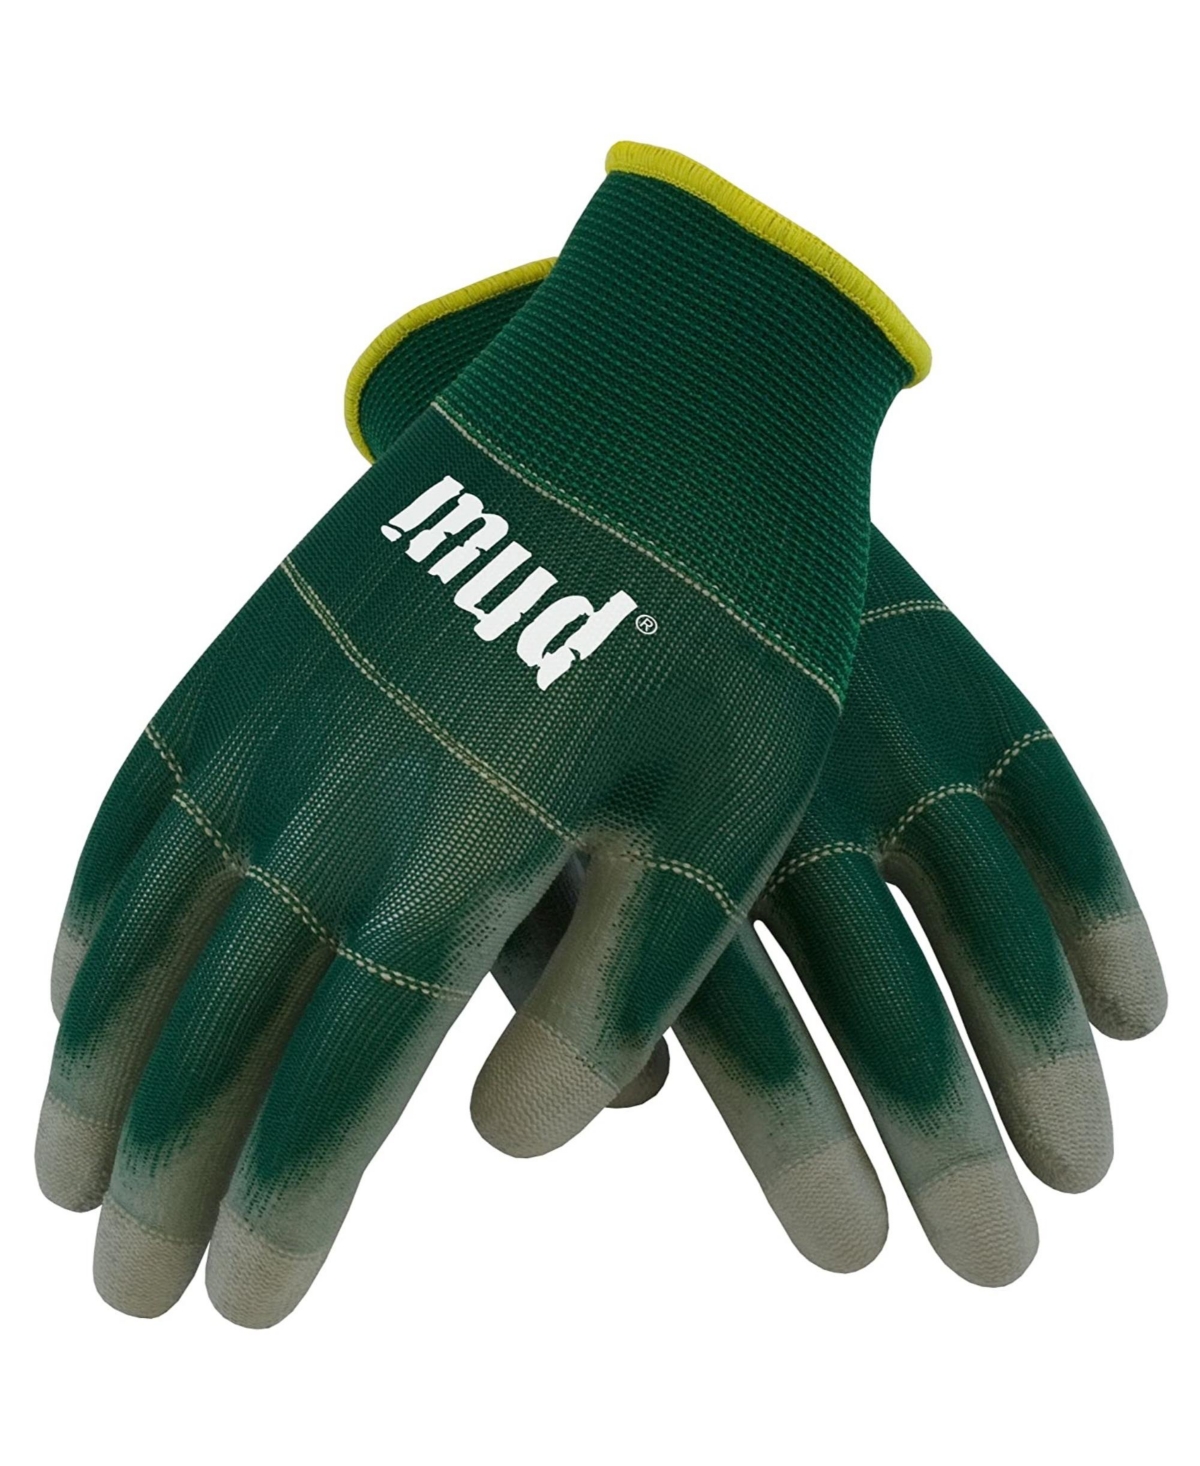 Safety Works 028C L Smart Mud Glove w Polyurethane Coating, Large, Cucumber - Green